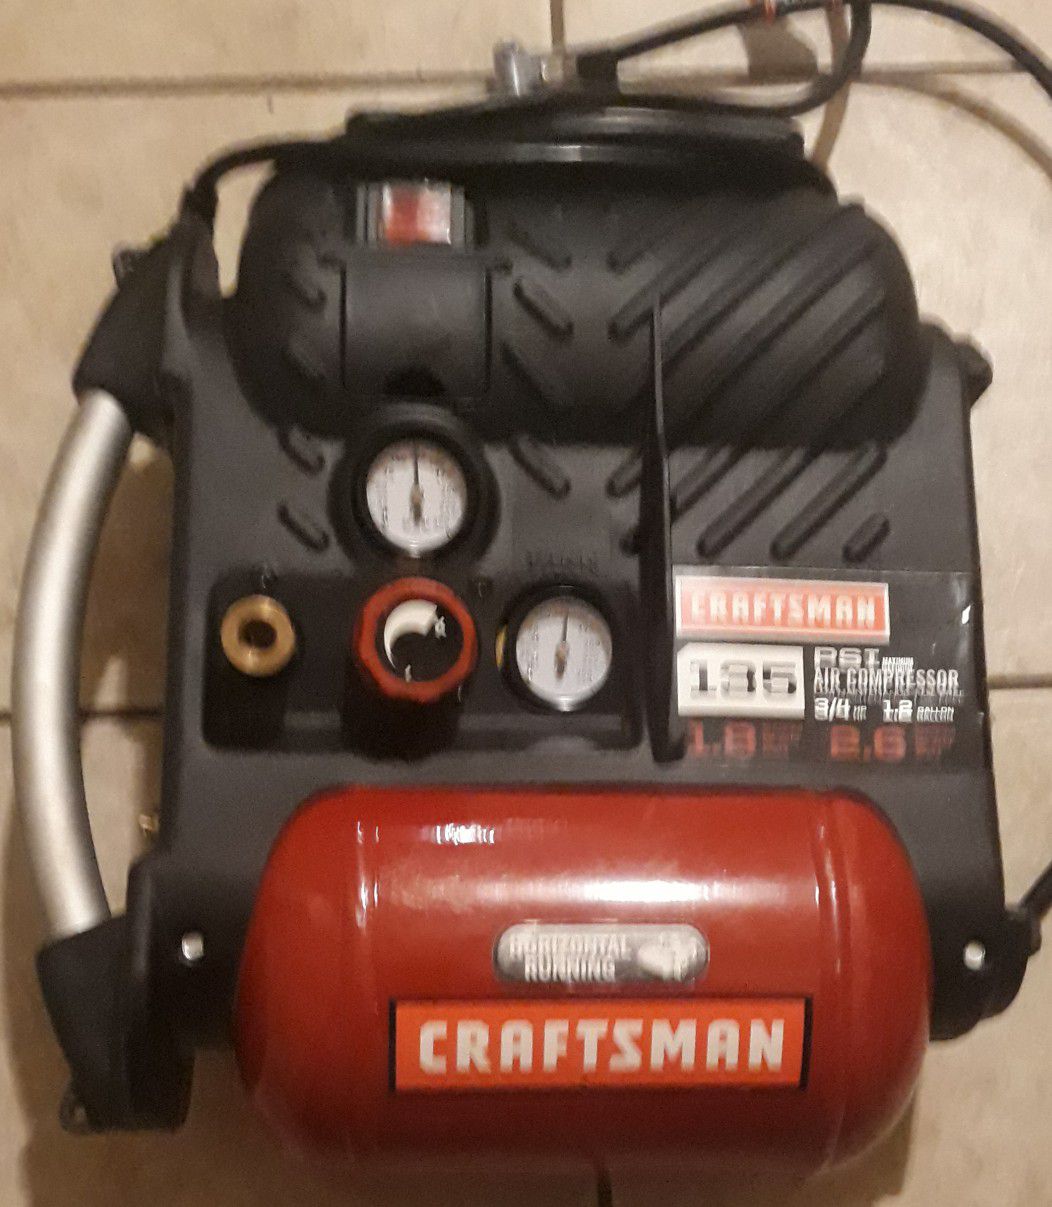 Craftsman 1.2 gallon air compressor